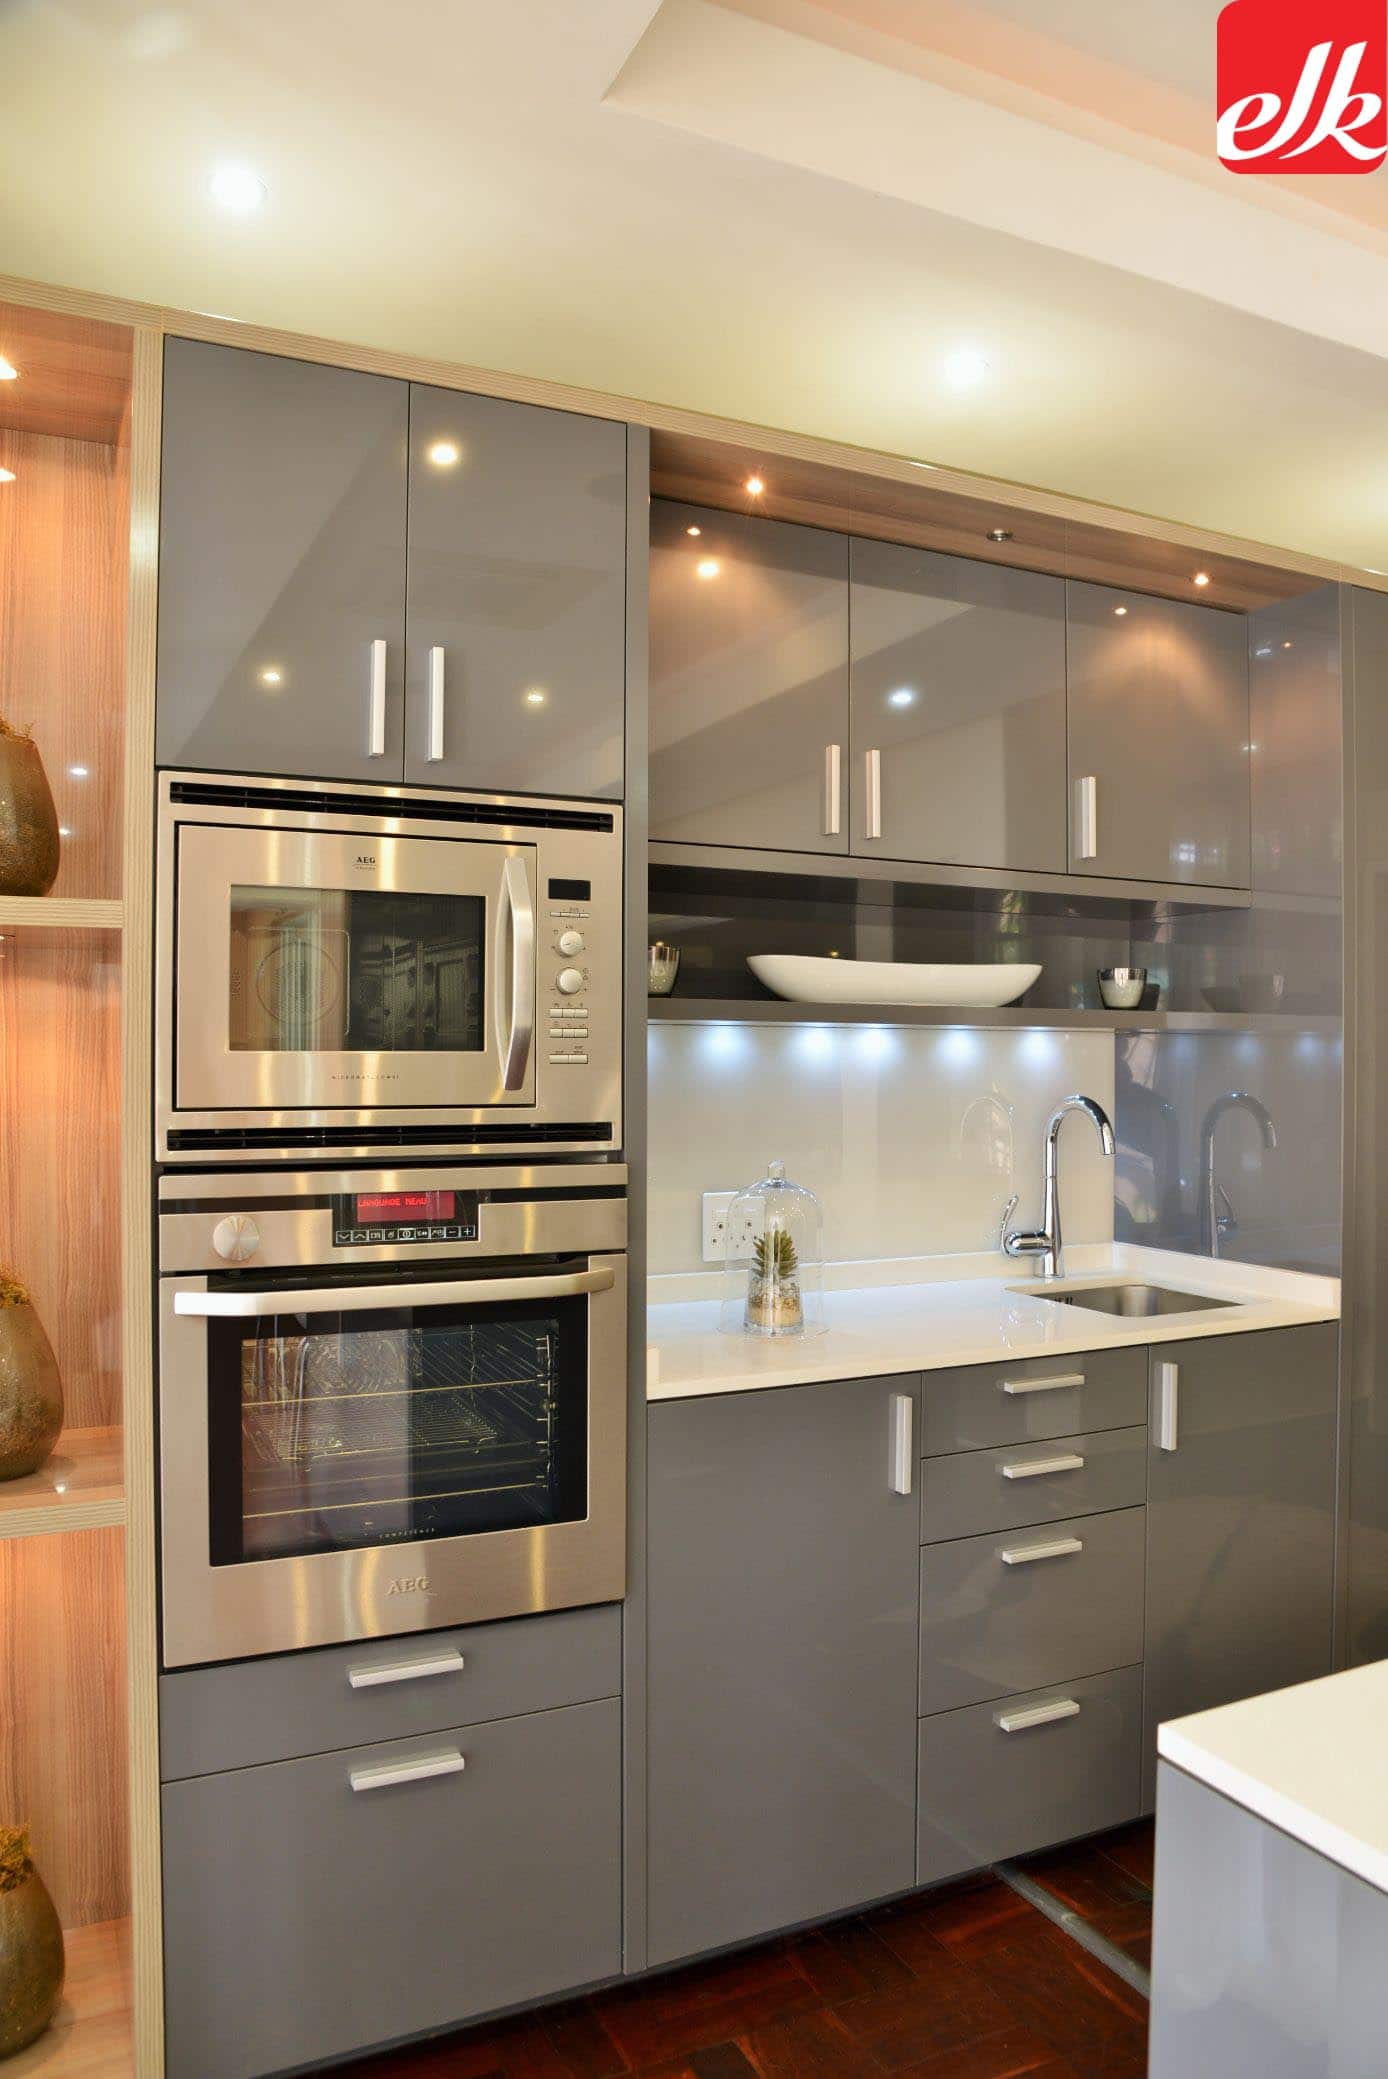  kitchen units designs for small kitchens